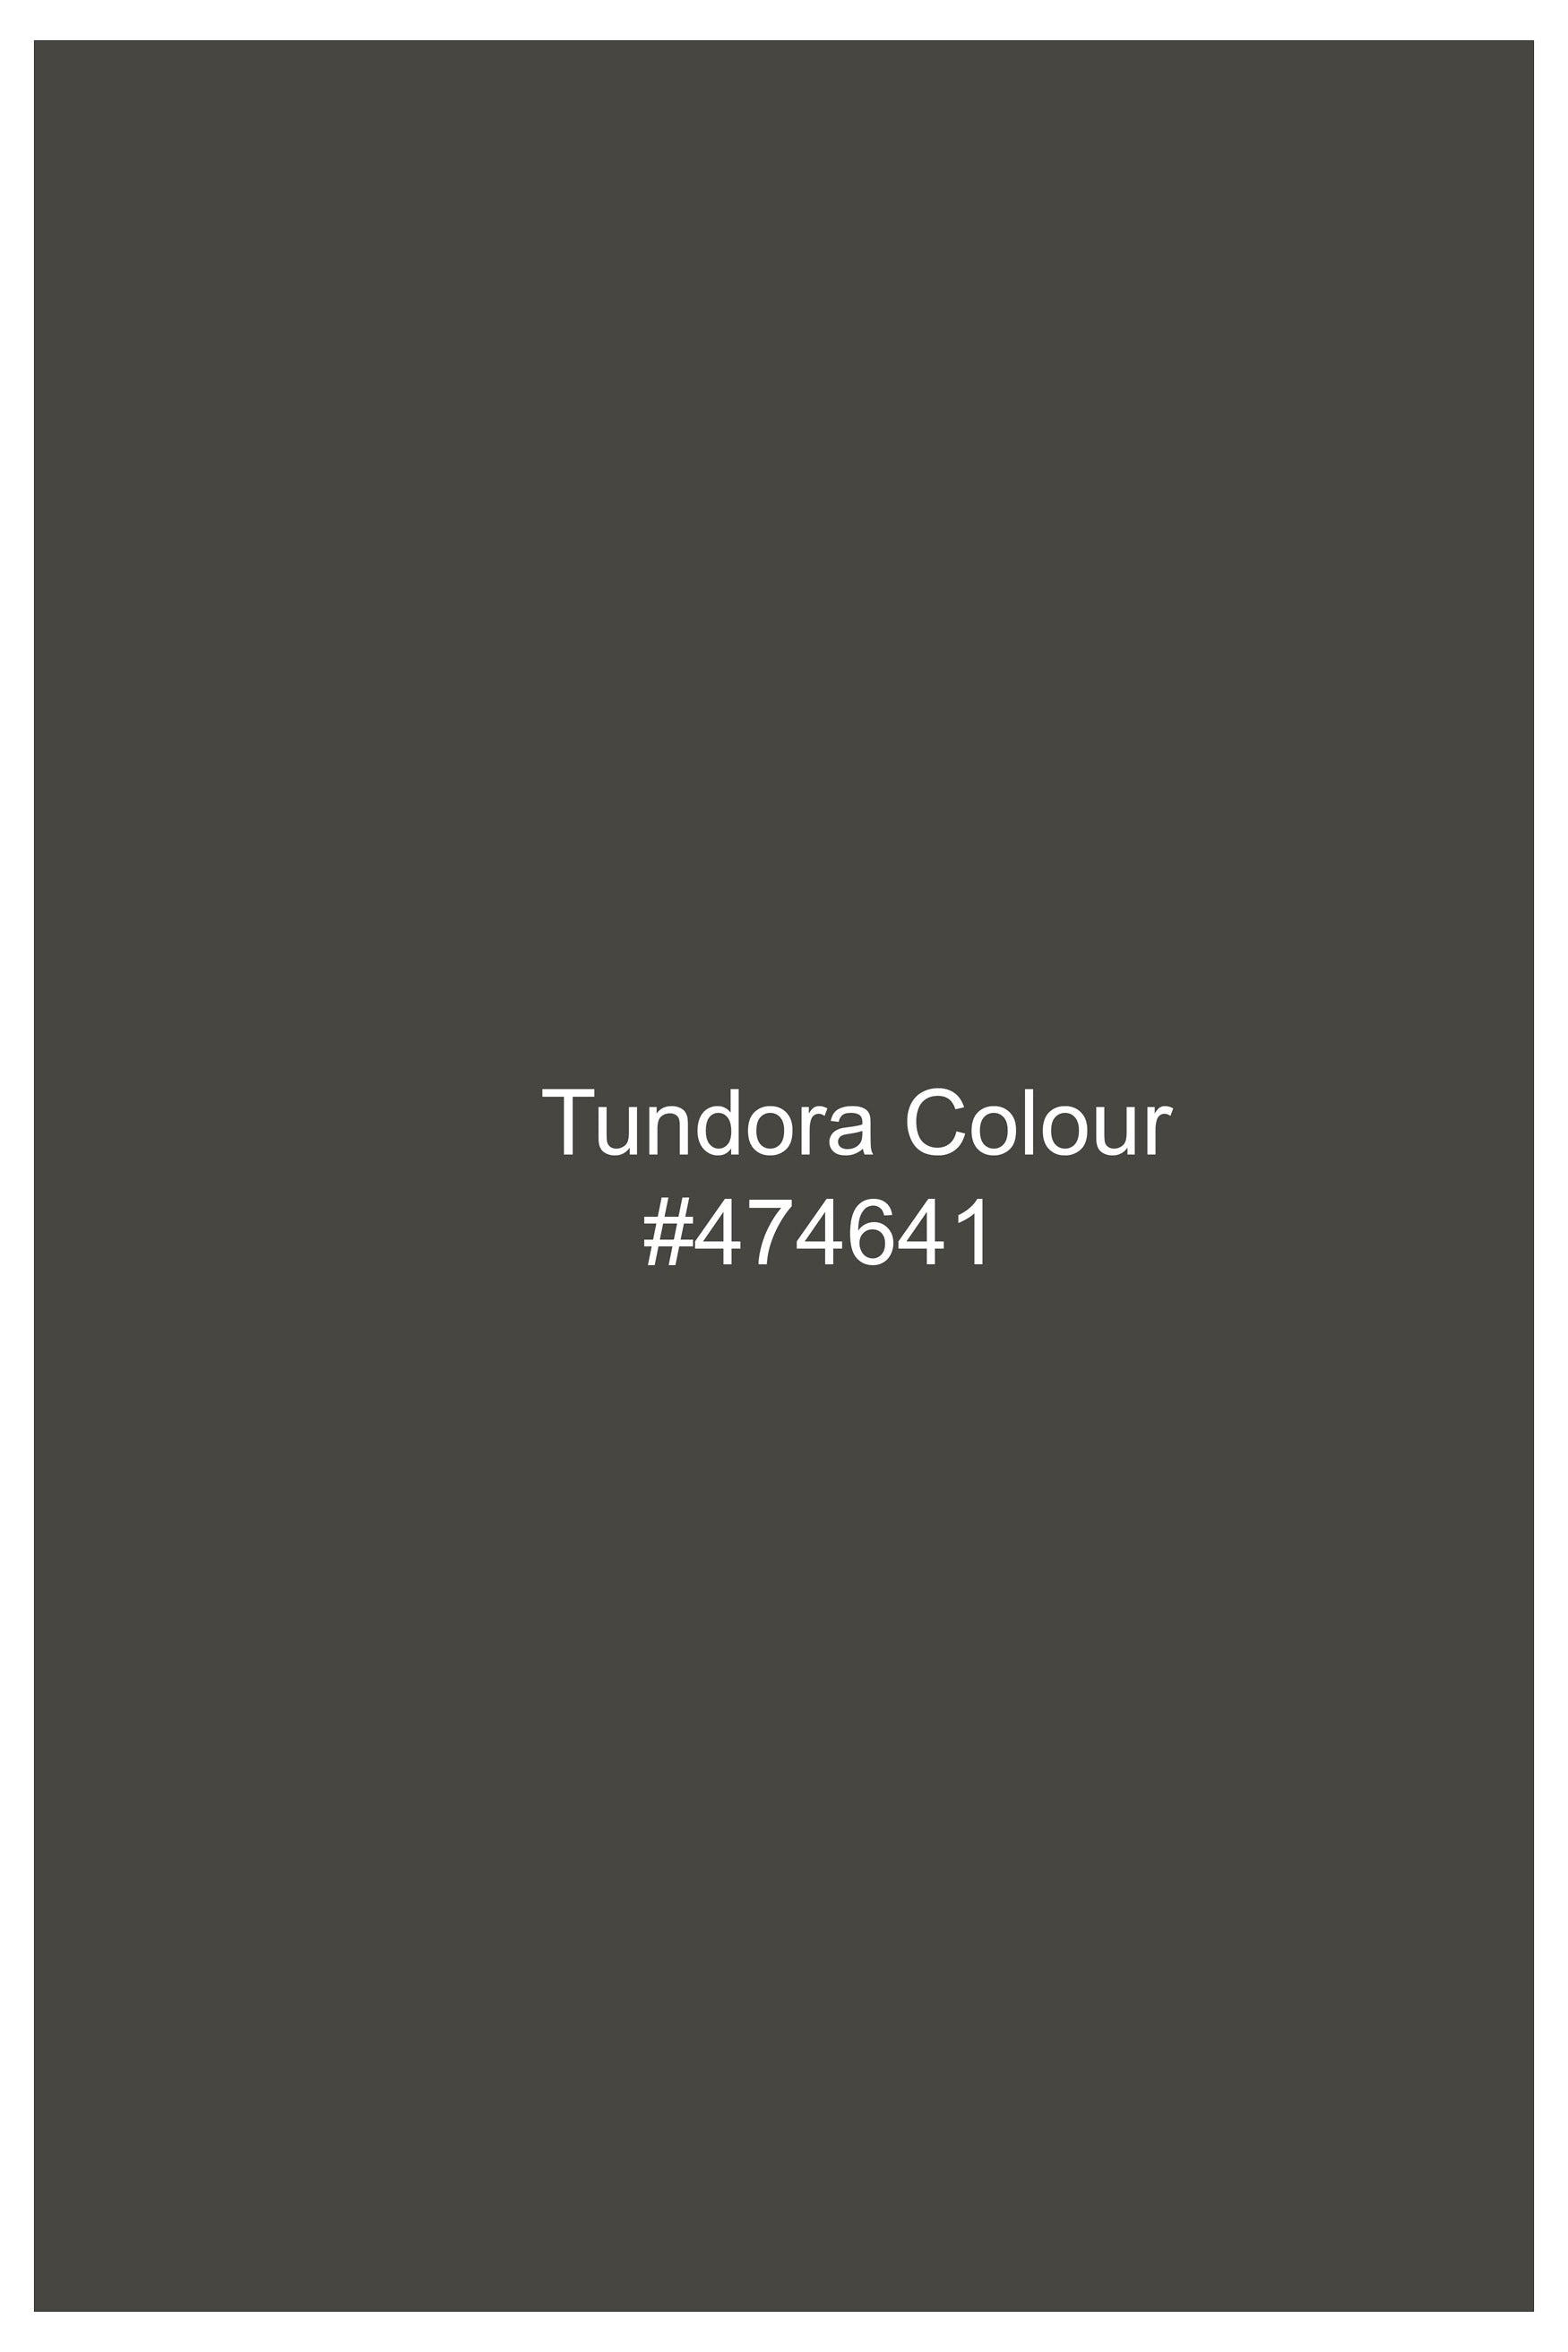 Tundora Gray Clean Look Stretchable Lightweight Denim